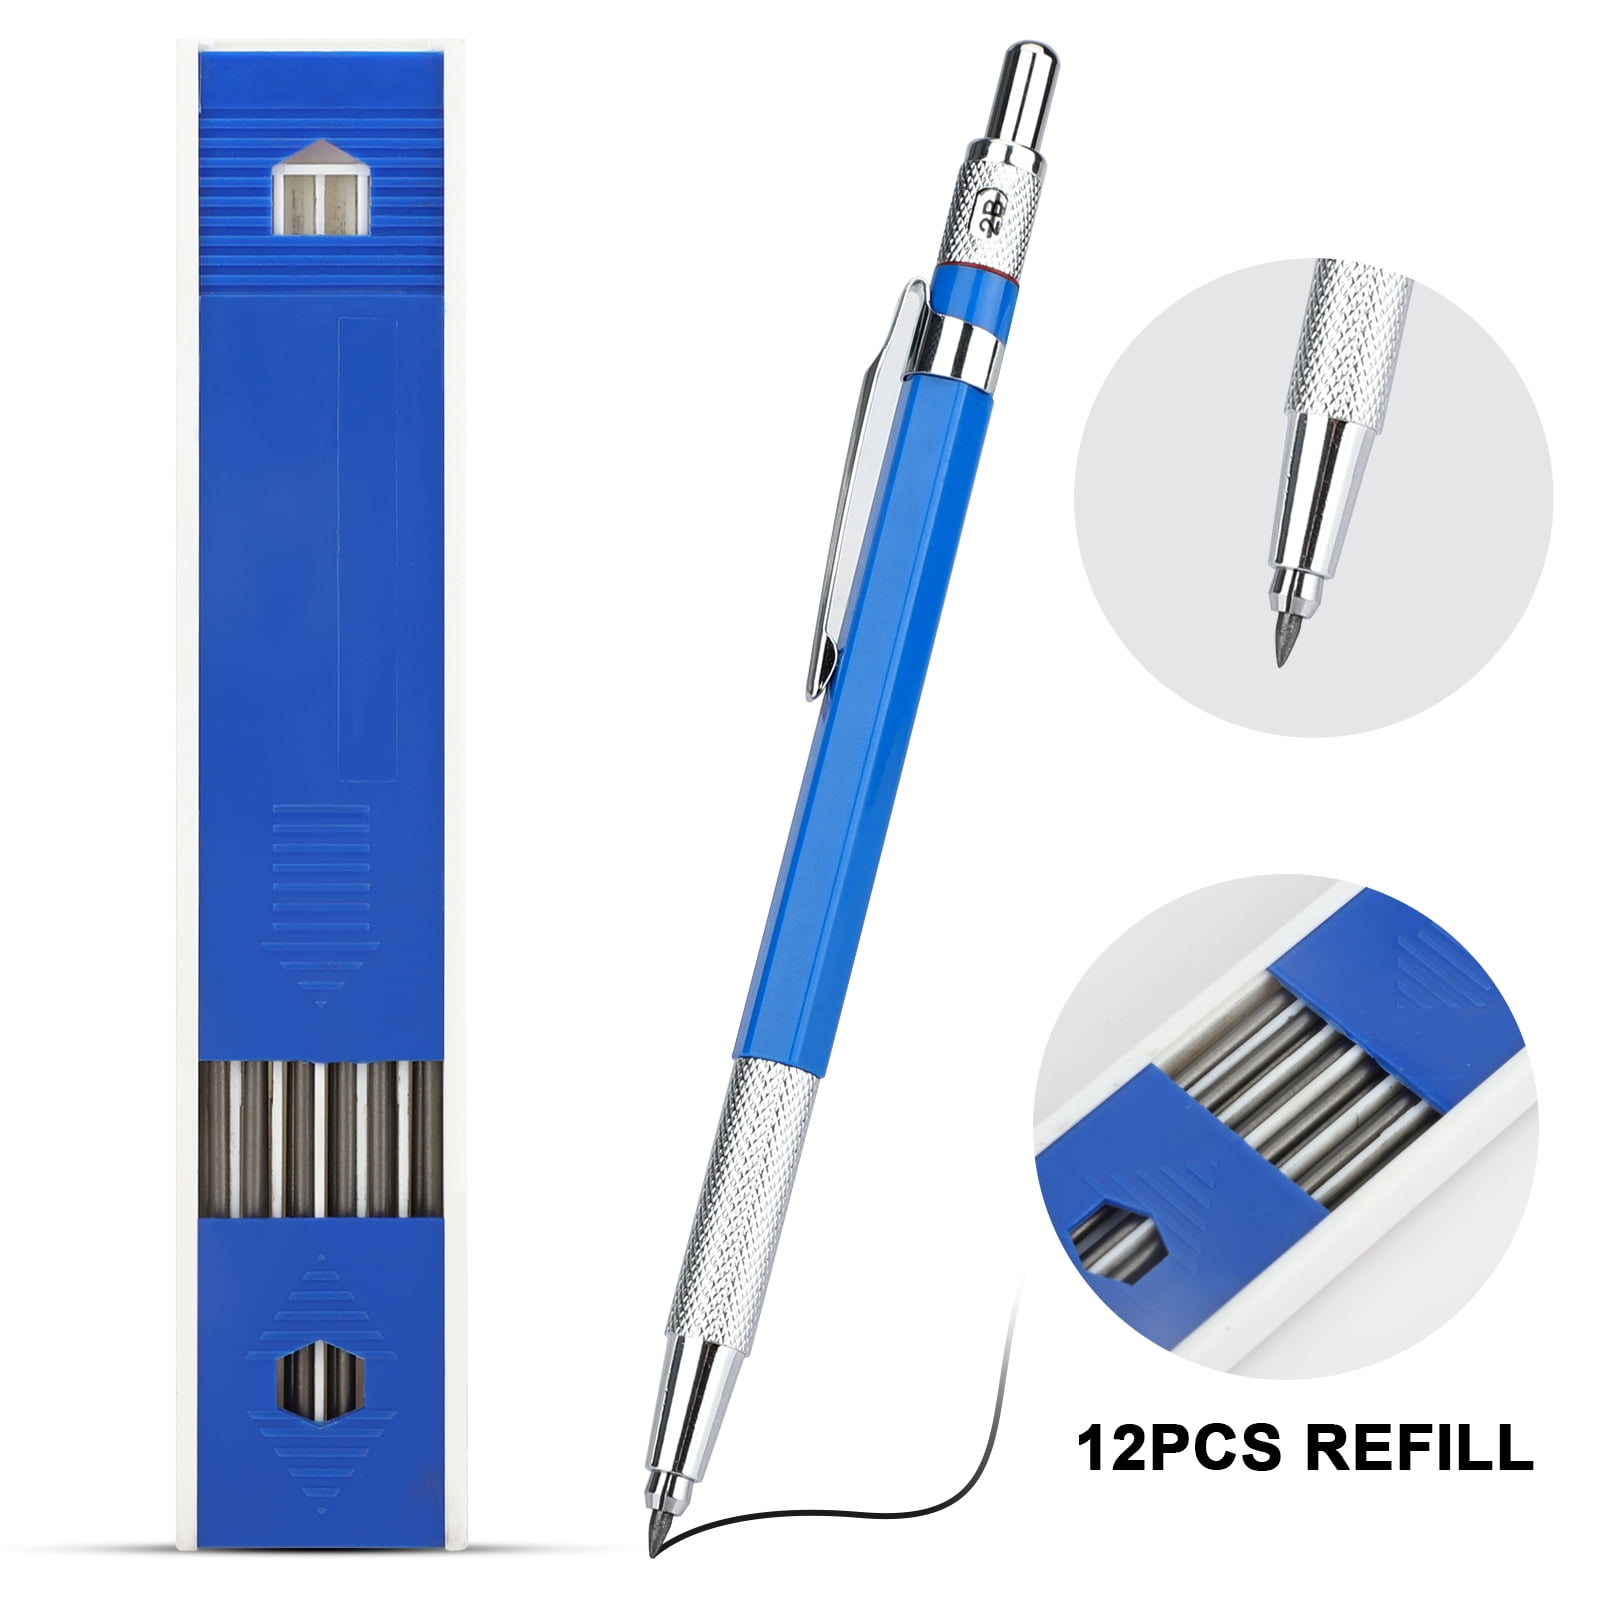 12Pcs Set 2.0mm 2B Colored Pencil Lead 2mm Mechanical Clutch Holder Refill 